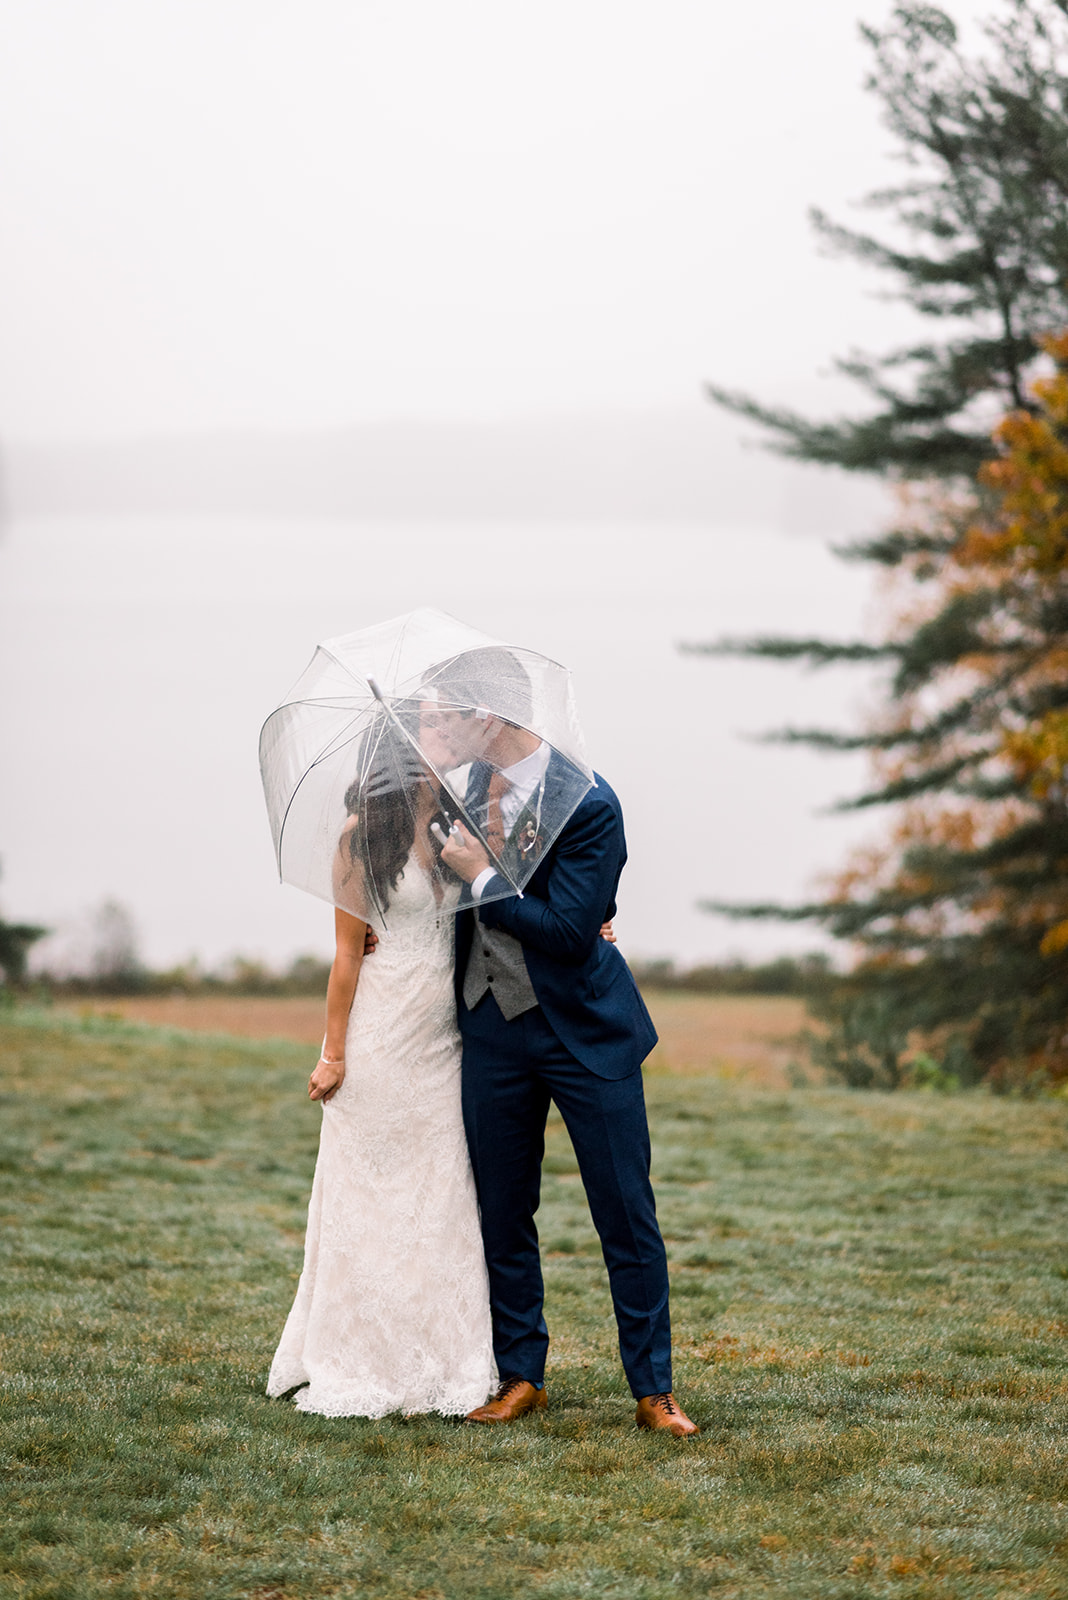 A fall wedding at Bear Mountain Inn in Waterford, Maine.